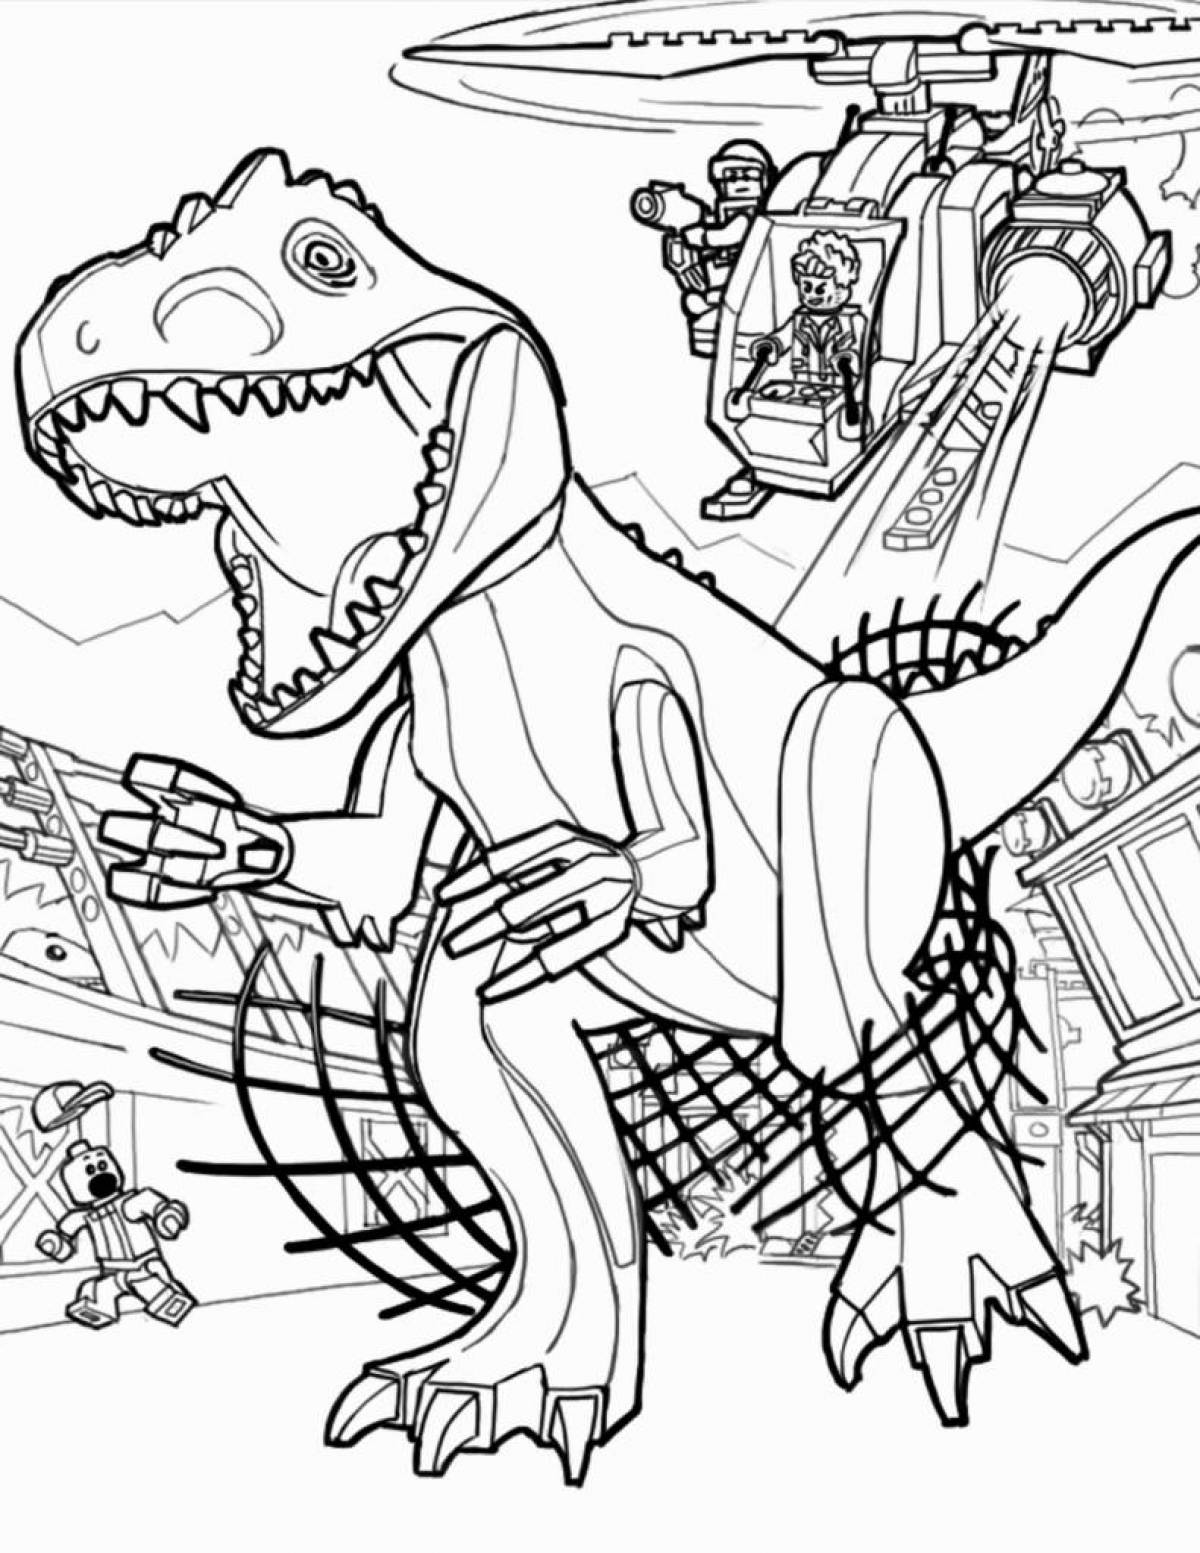 Adorable Jurassic Park coloring book